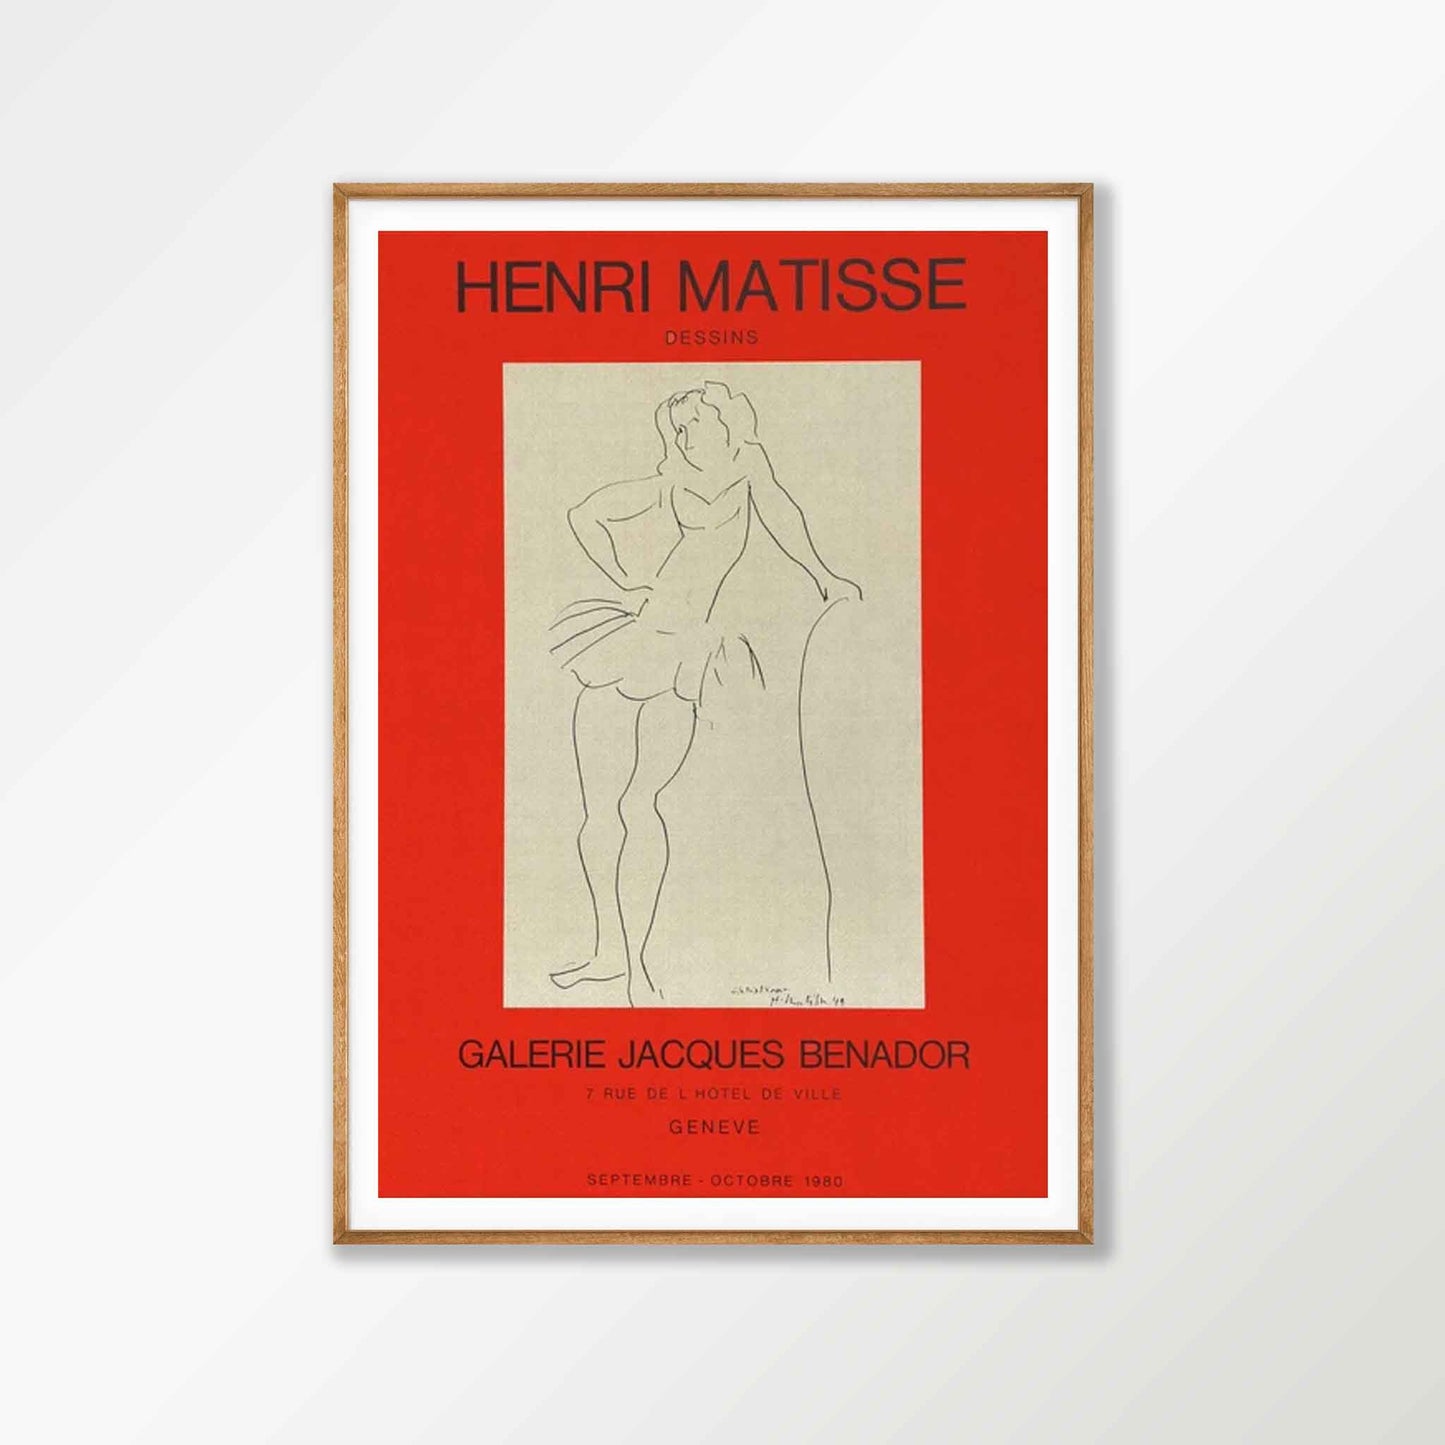 Galerie Jaques Benador by Henri Matisse